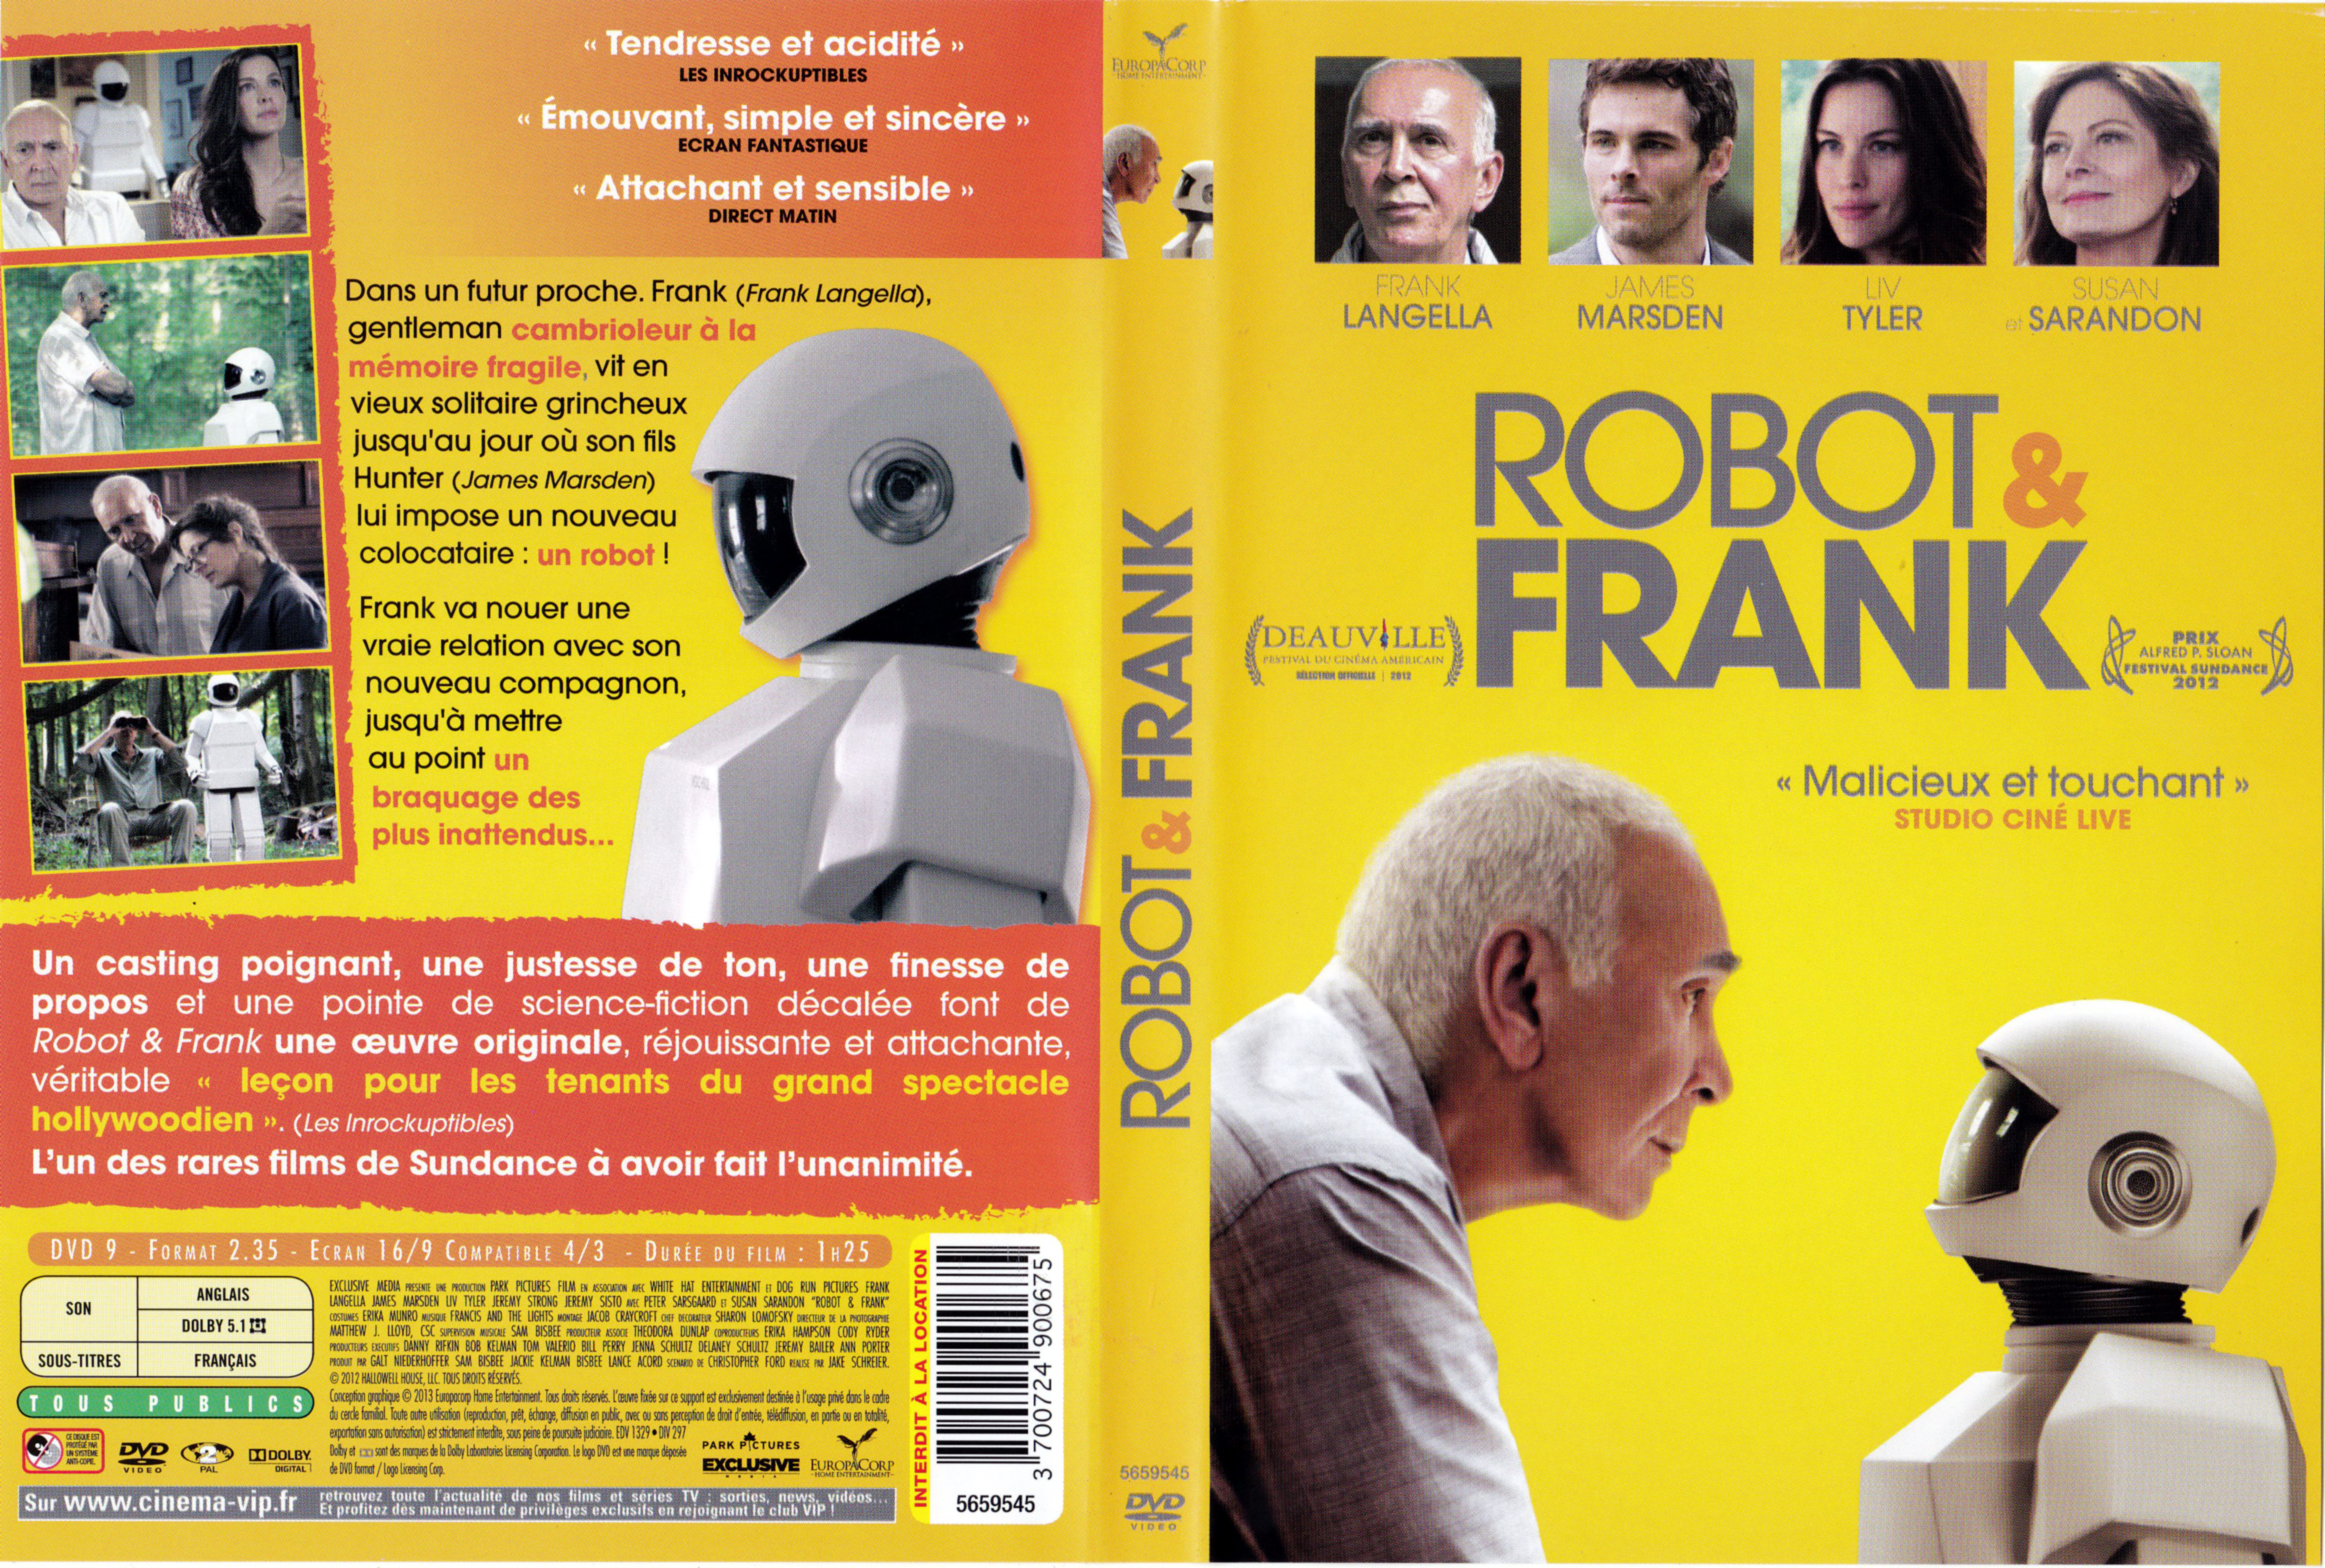 Jaquette DVD Robot & Frank